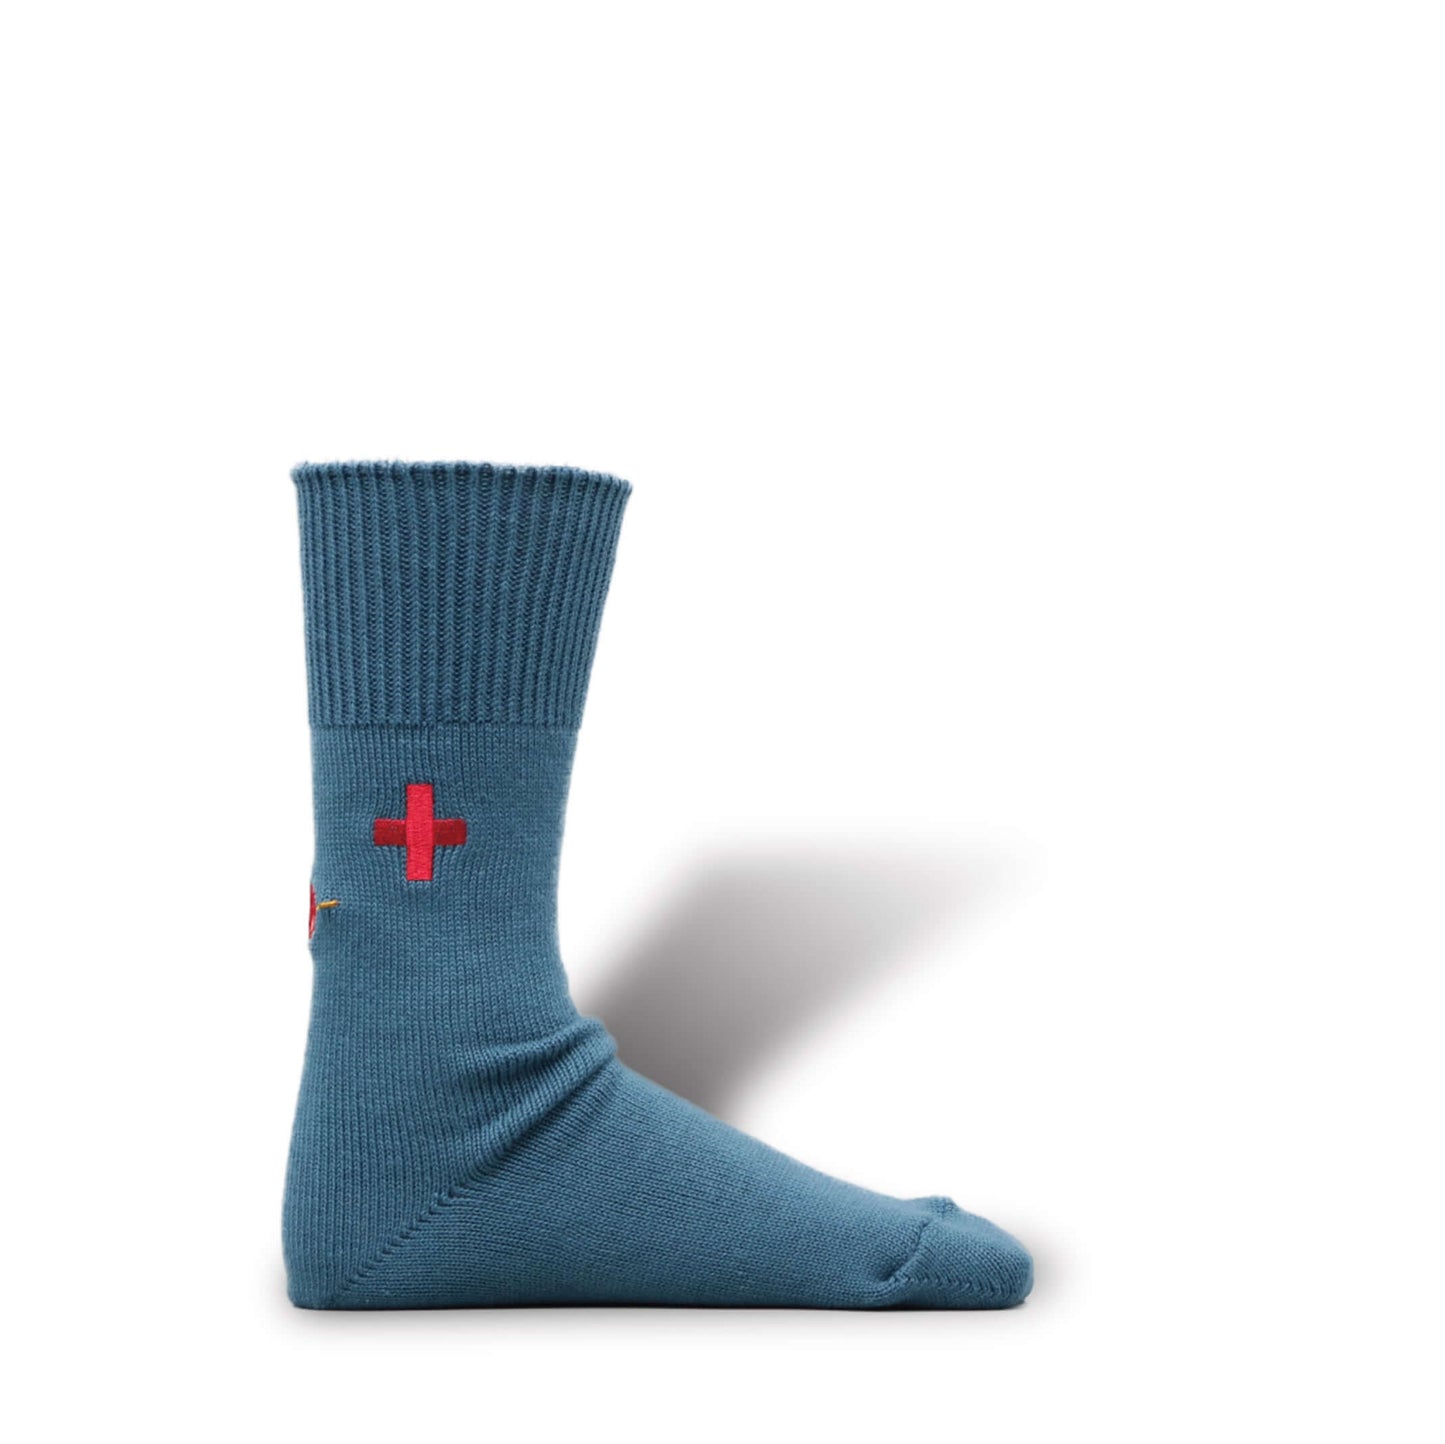 Souvenir Socks | Switzerland